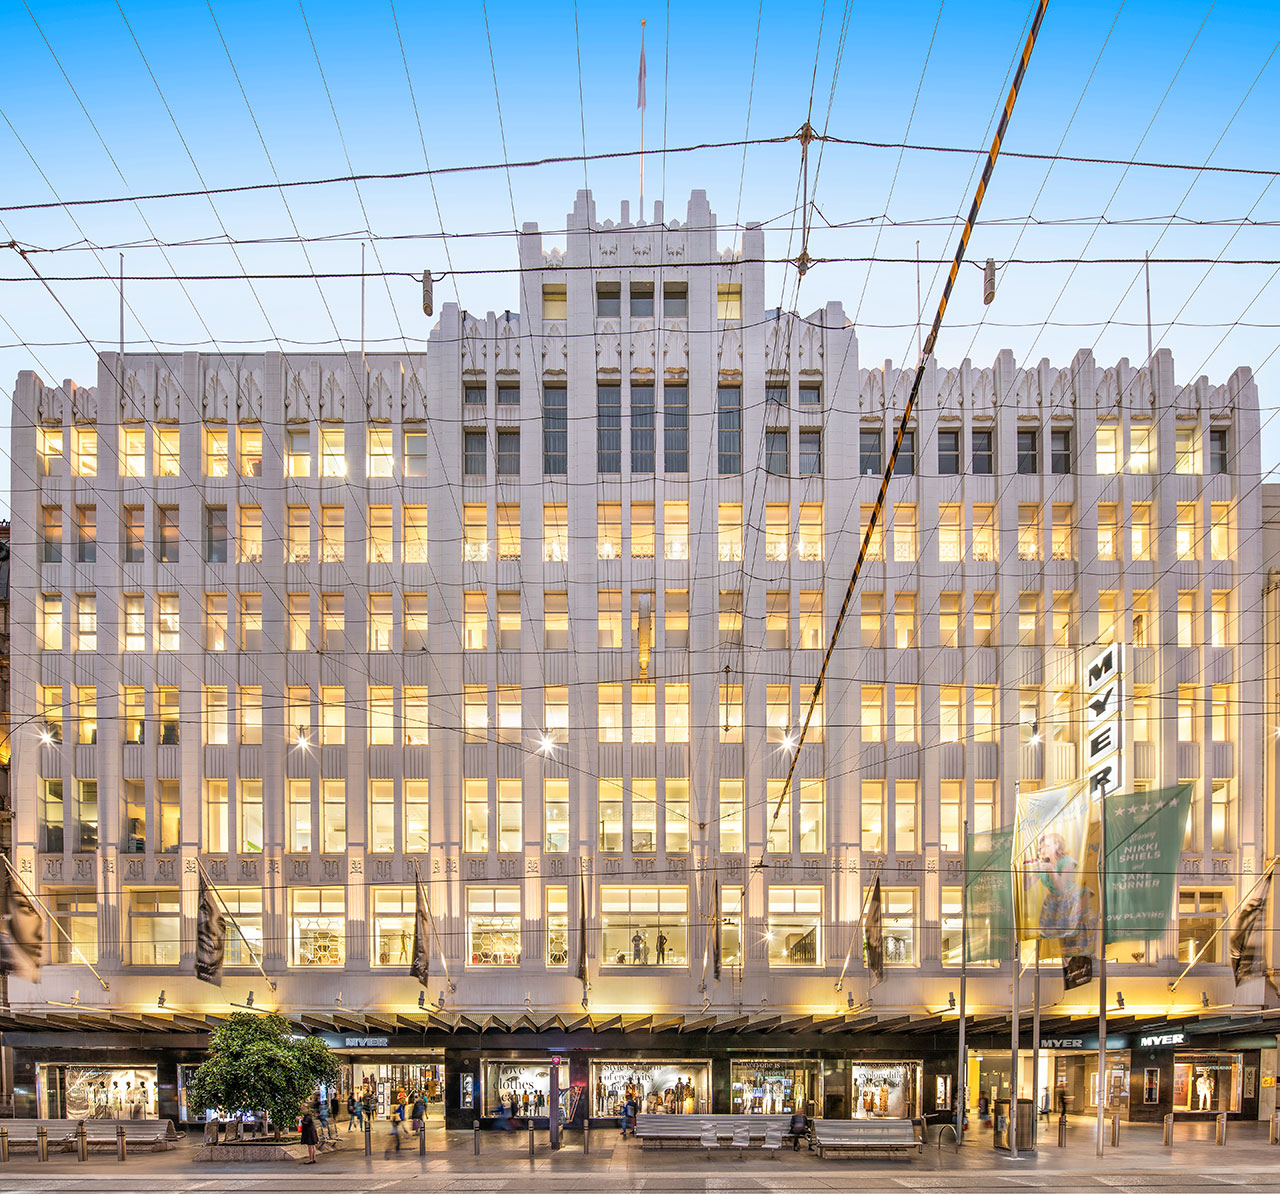 David Jones' Flagship Sydney CBD Store Sold for $510 Million